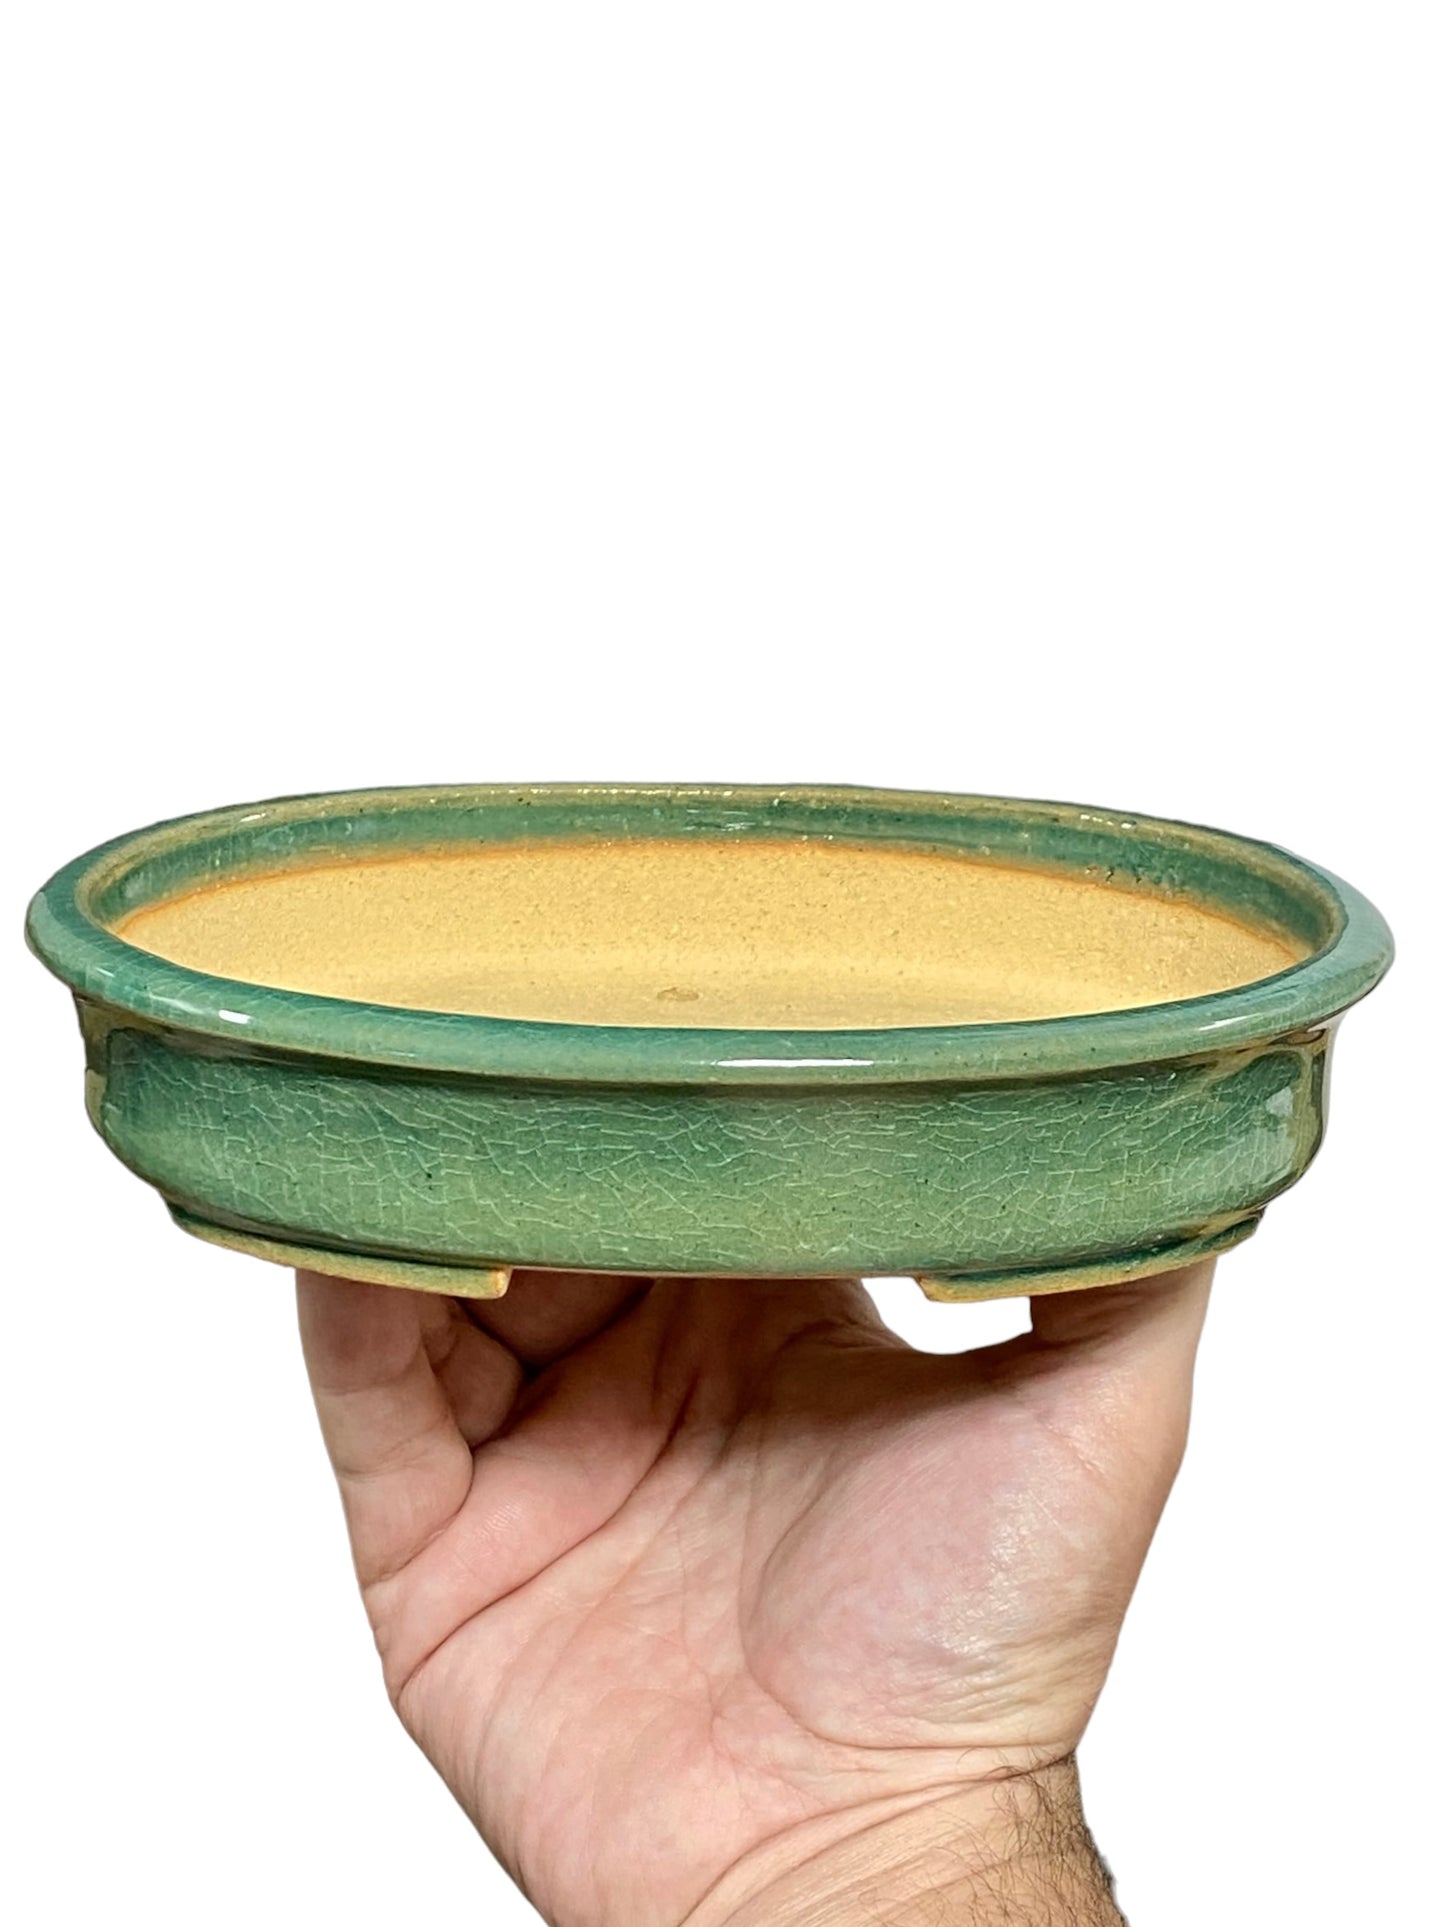 Shibakatsu - Stellar Crackle Glazed Oval Style Bonsai Pot